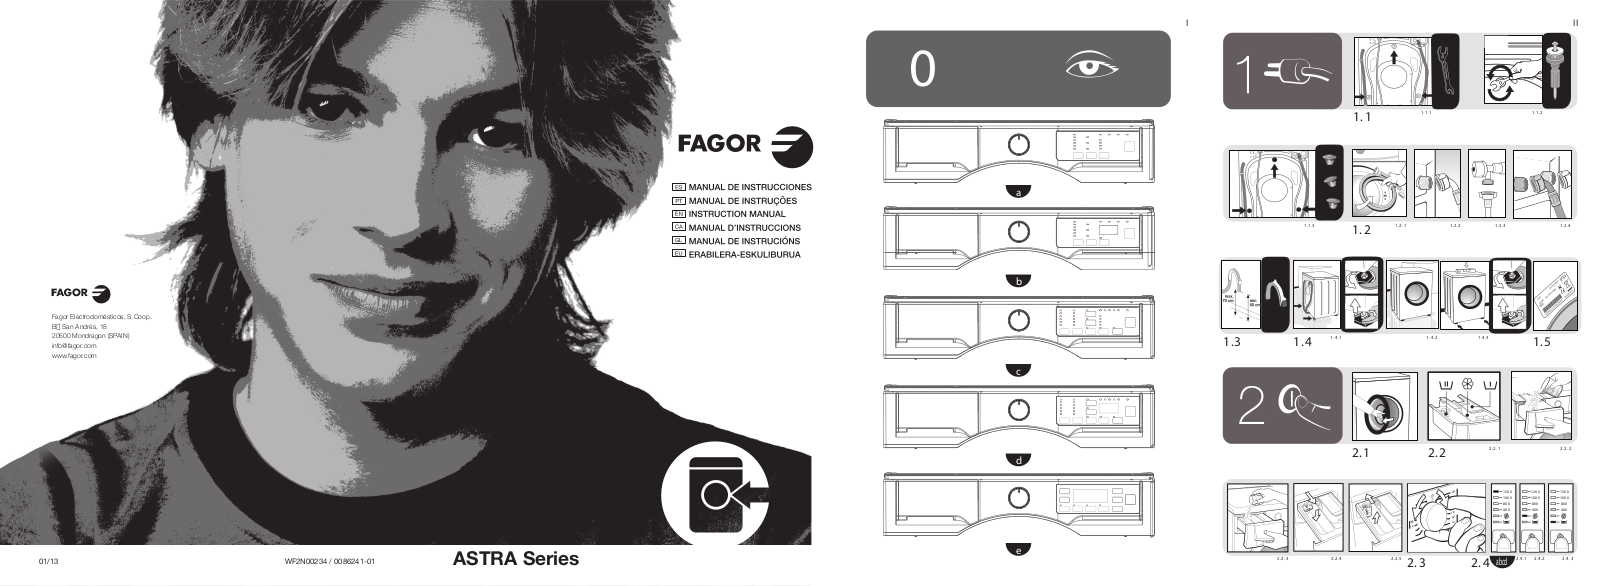 Fagor FE-812 User Manual